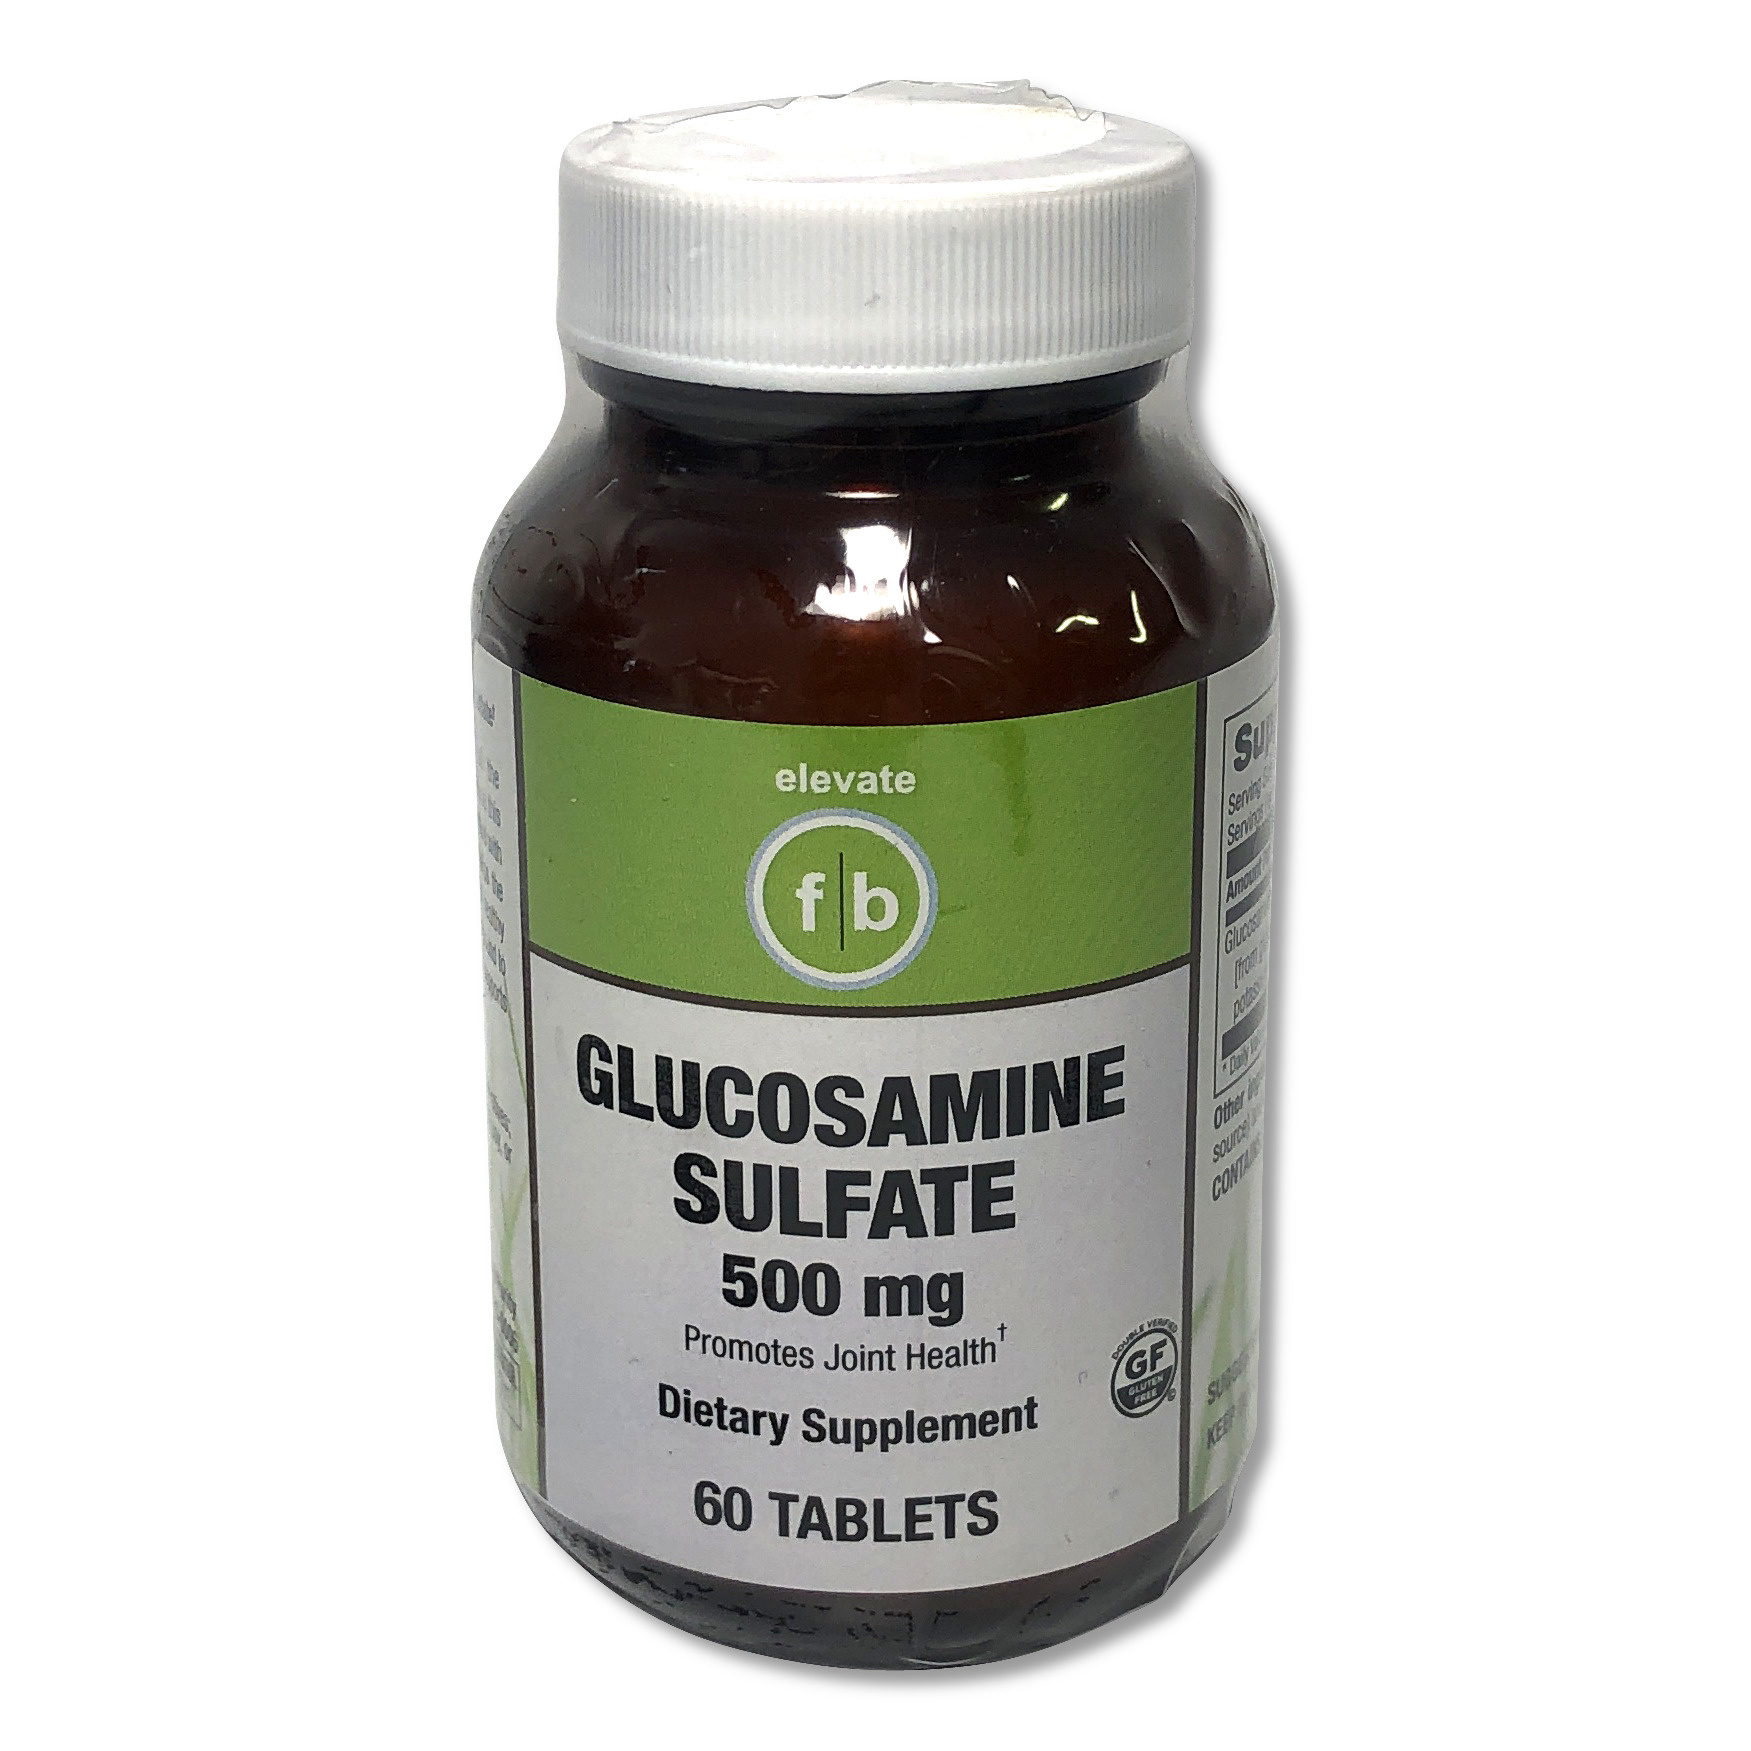 FLATBELLY GLUCOSAMINE SULFATE - 500mg-1